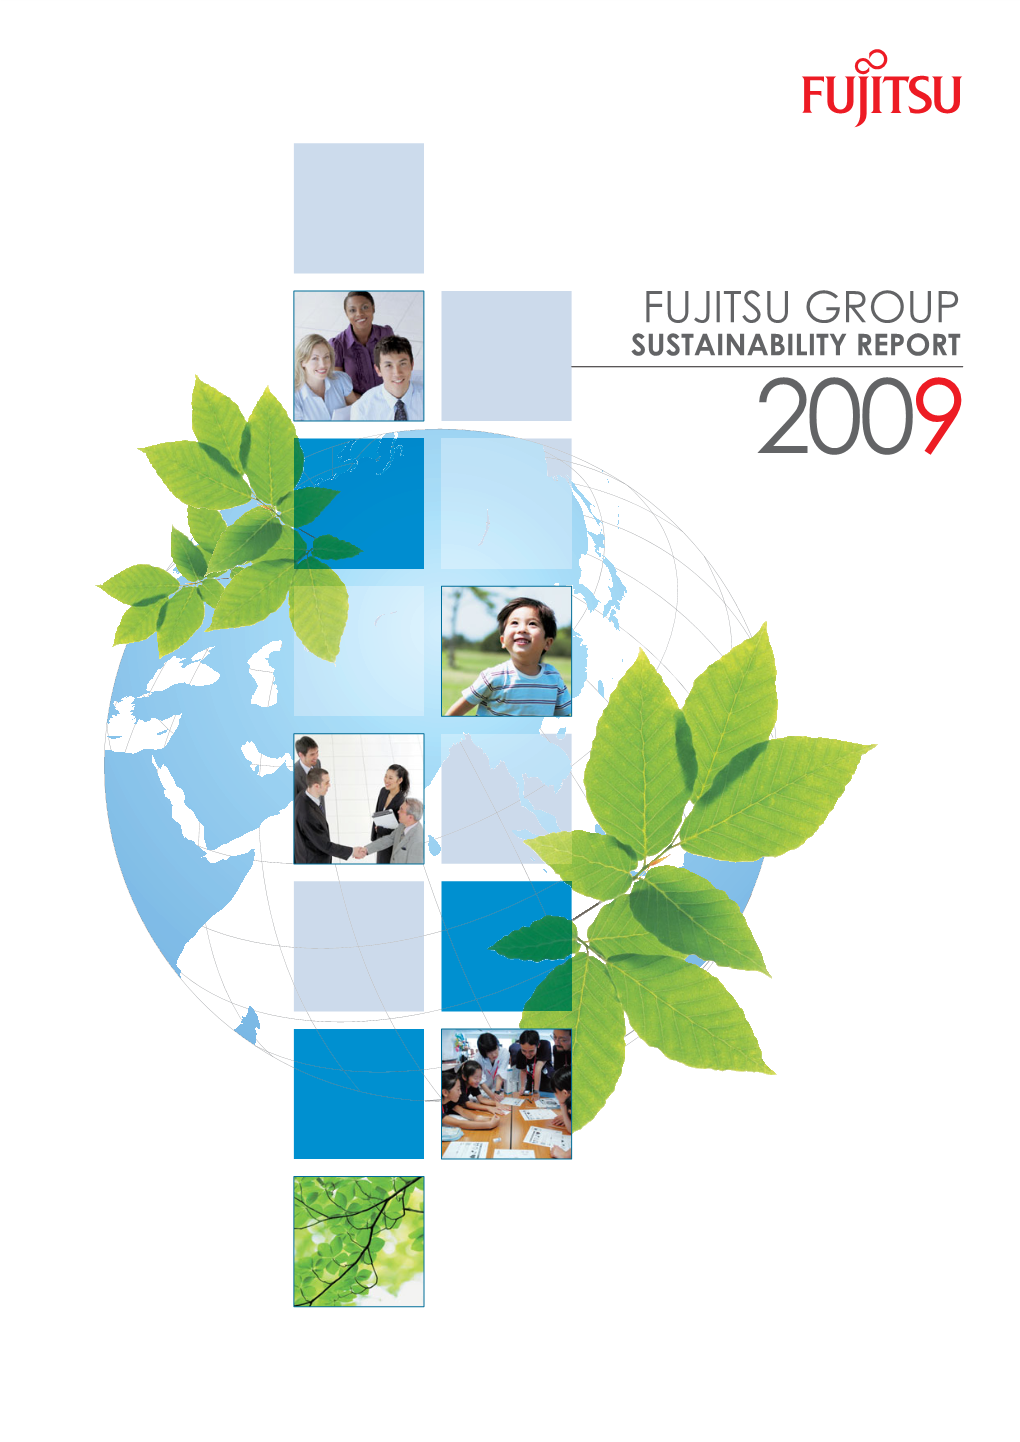 Fujitsu Group 2009 Sustainability Report